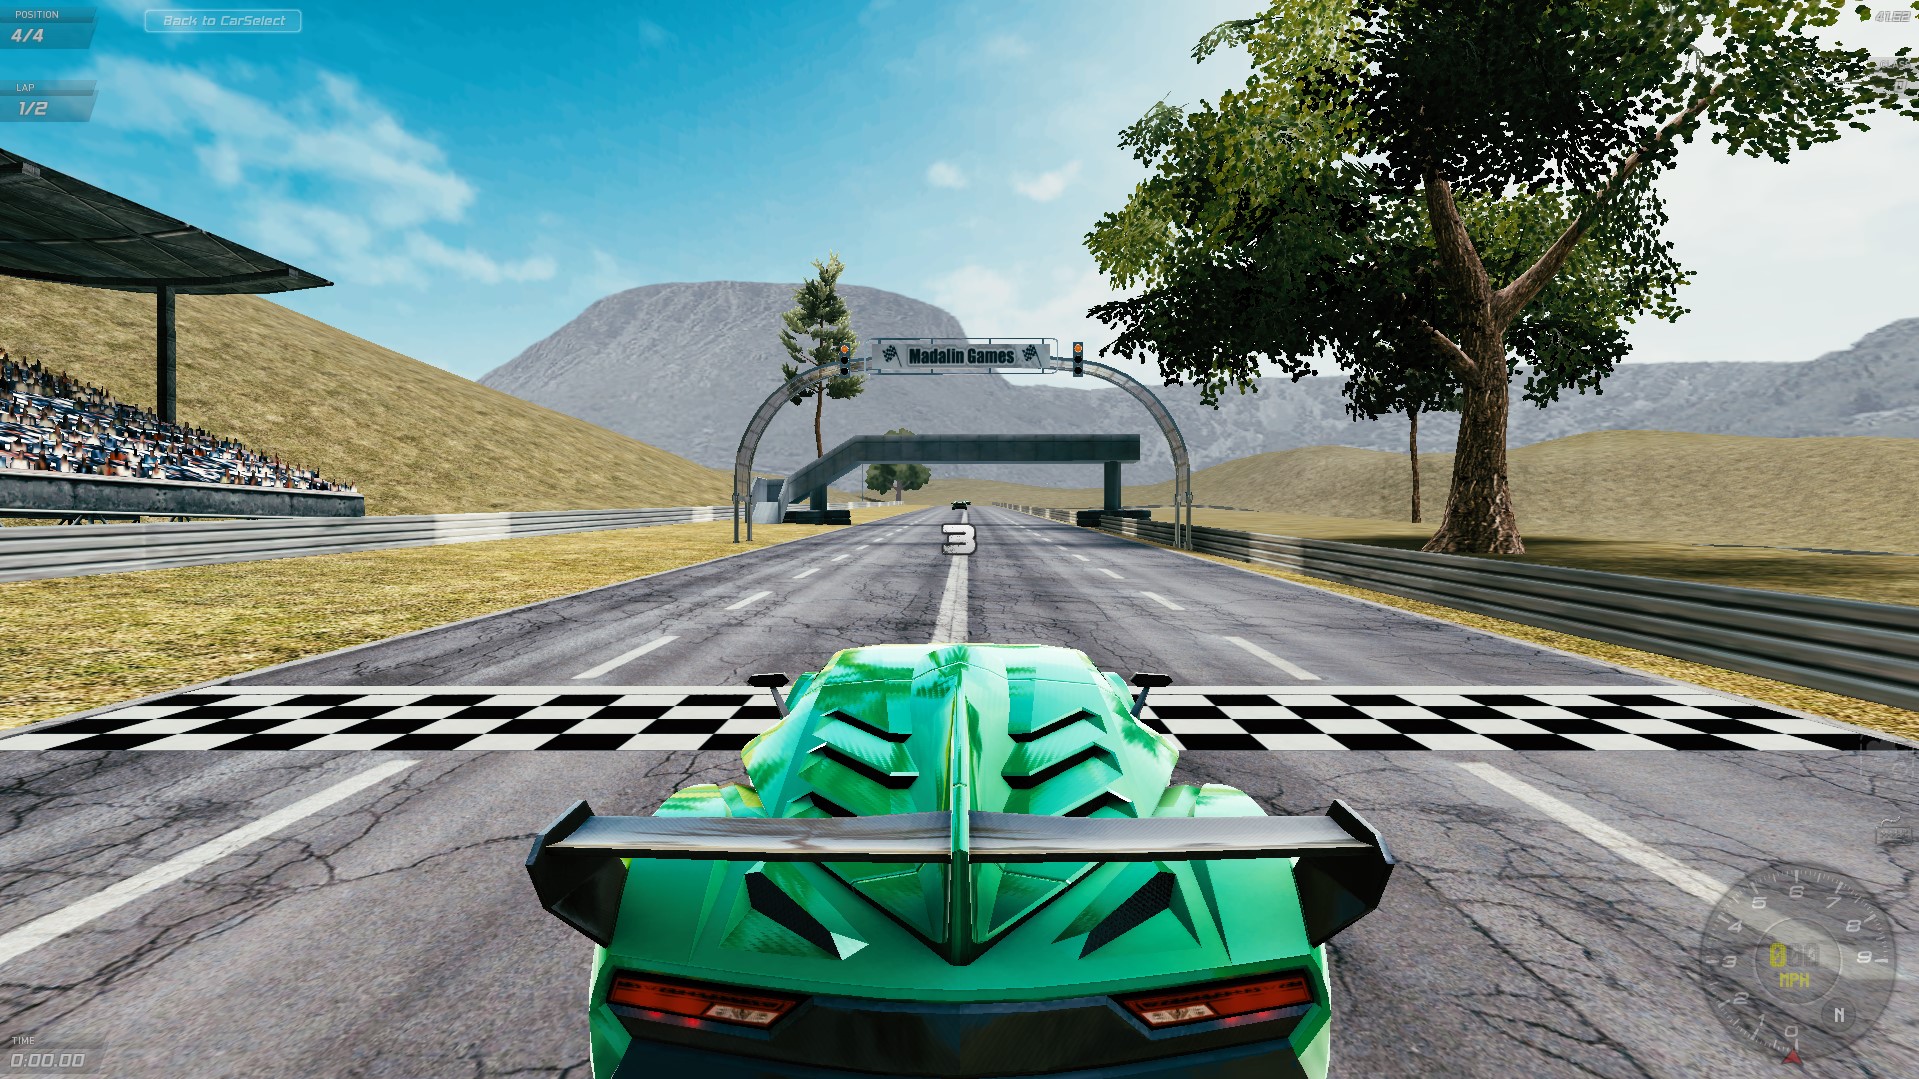 Image 5 - Speed Racing Pro 2 - ModDB